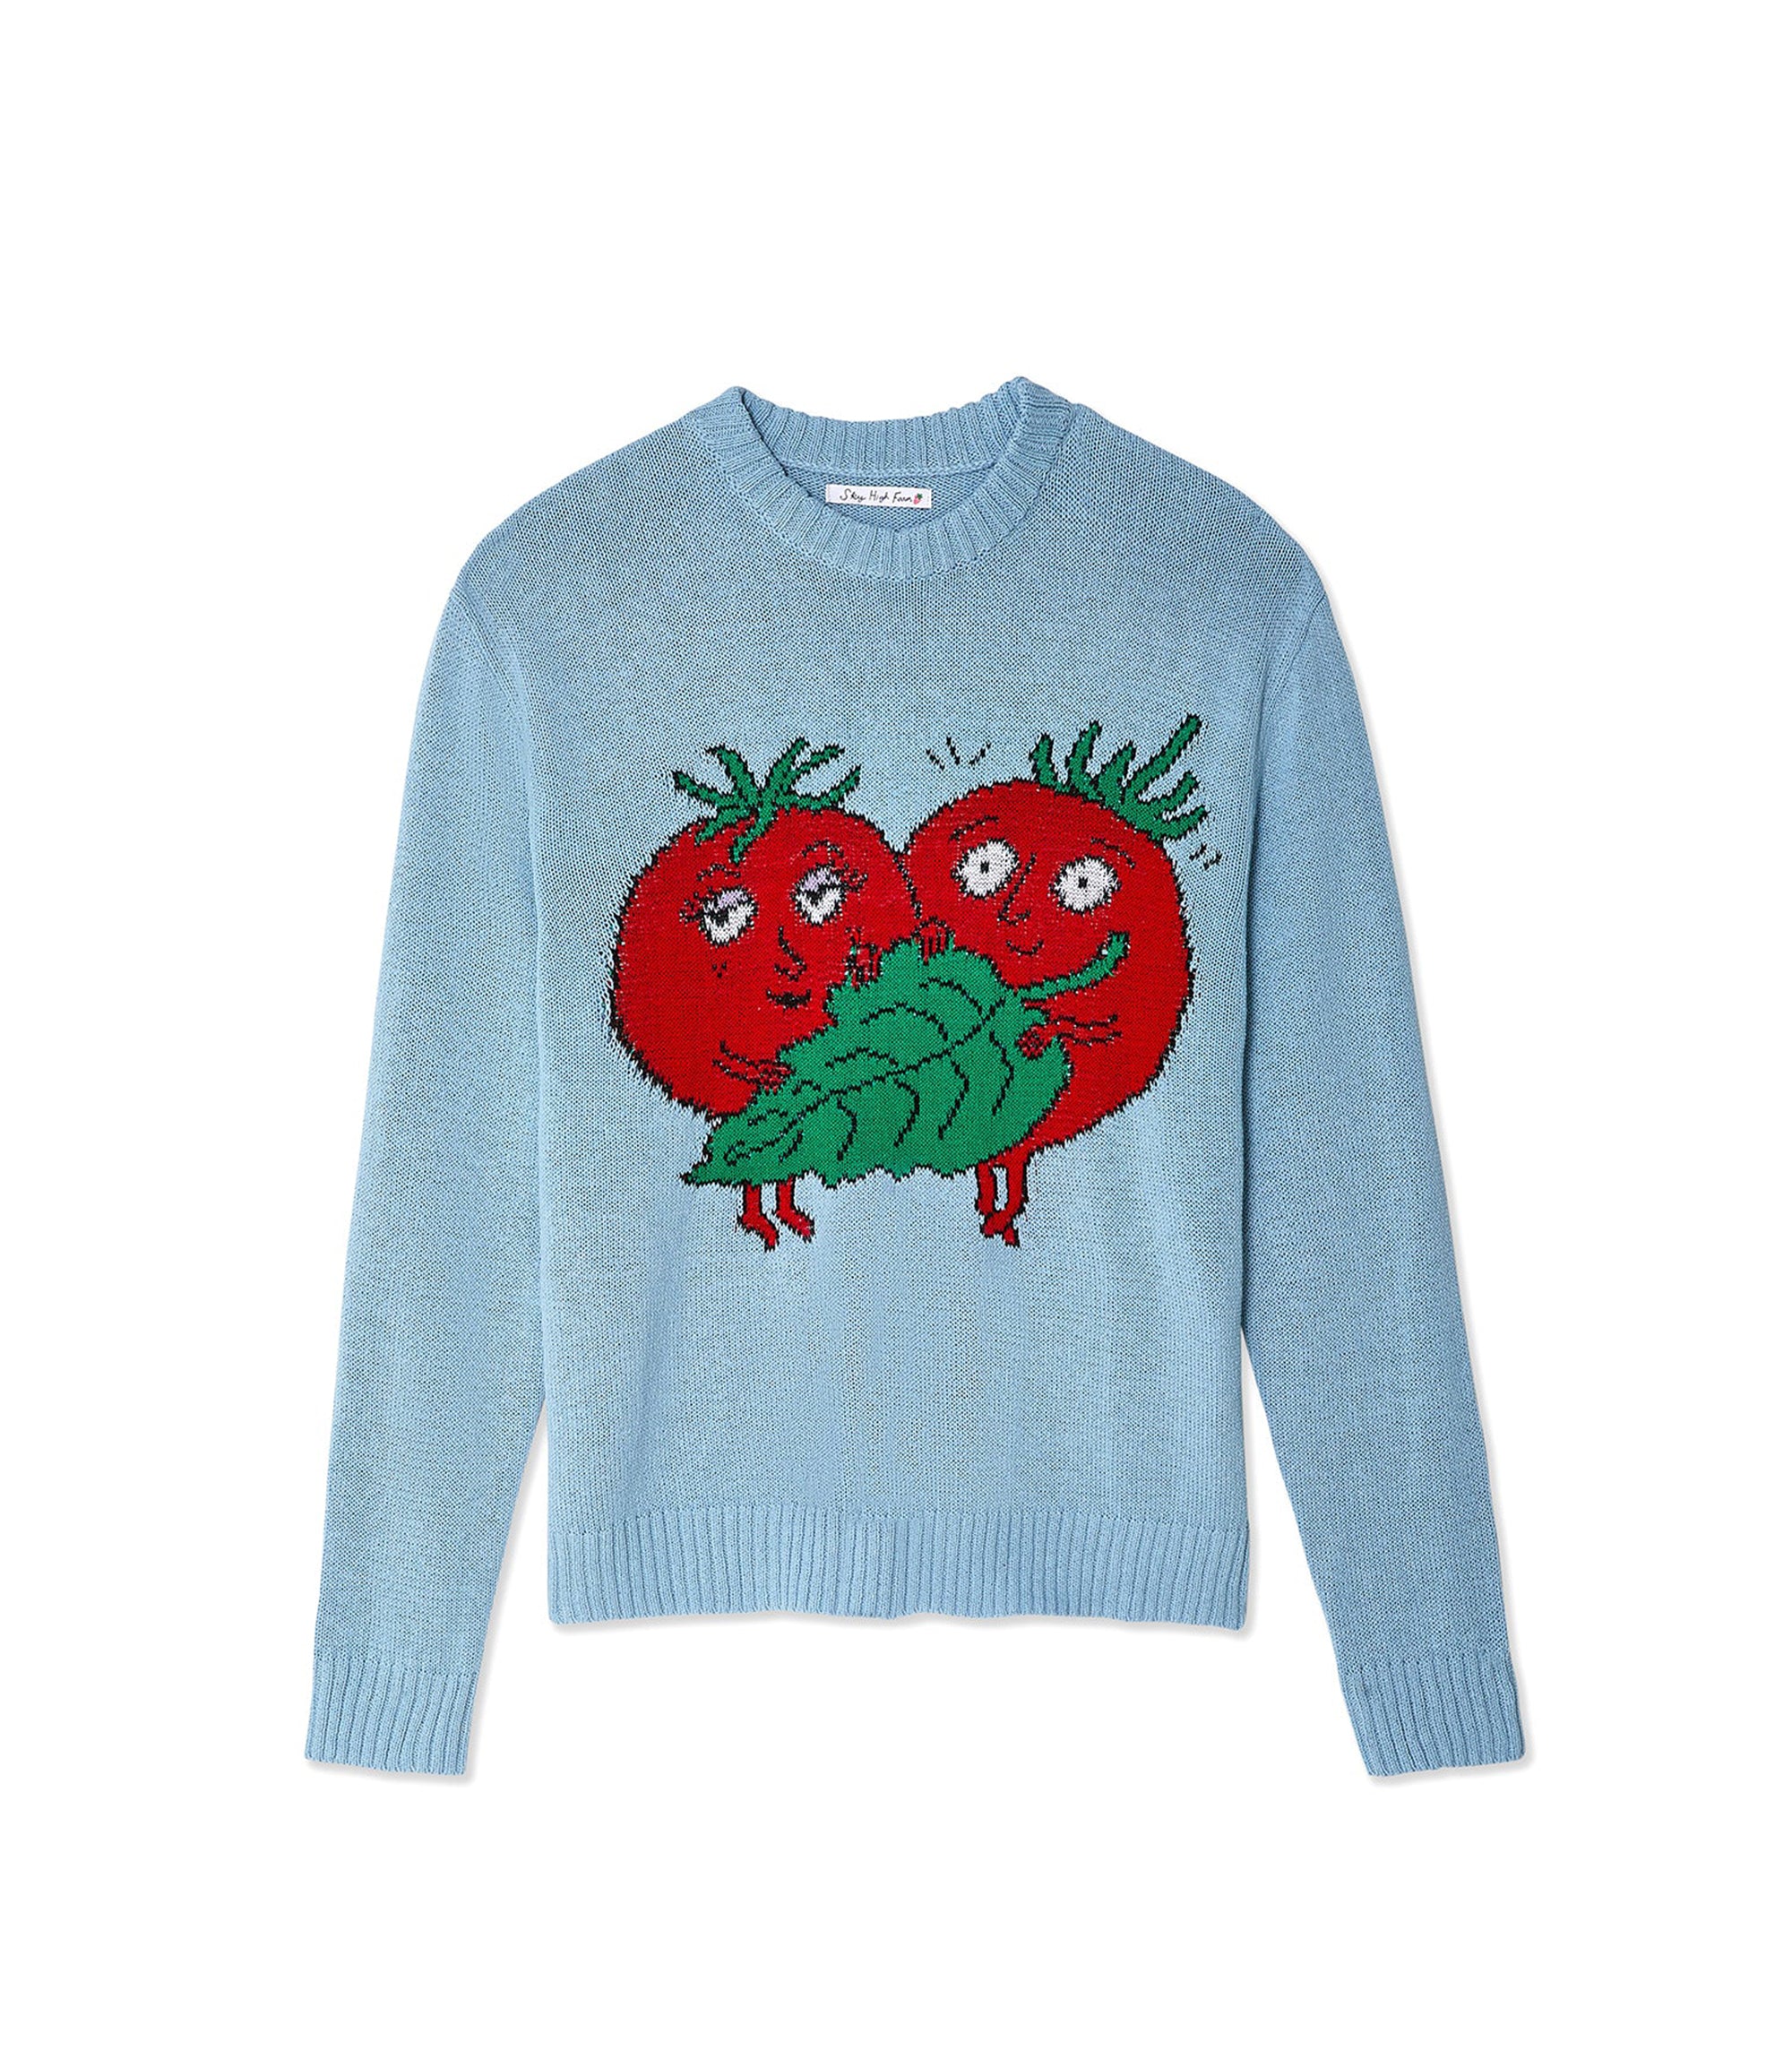 Intarsia Tomatoes Sweater - Light Blue